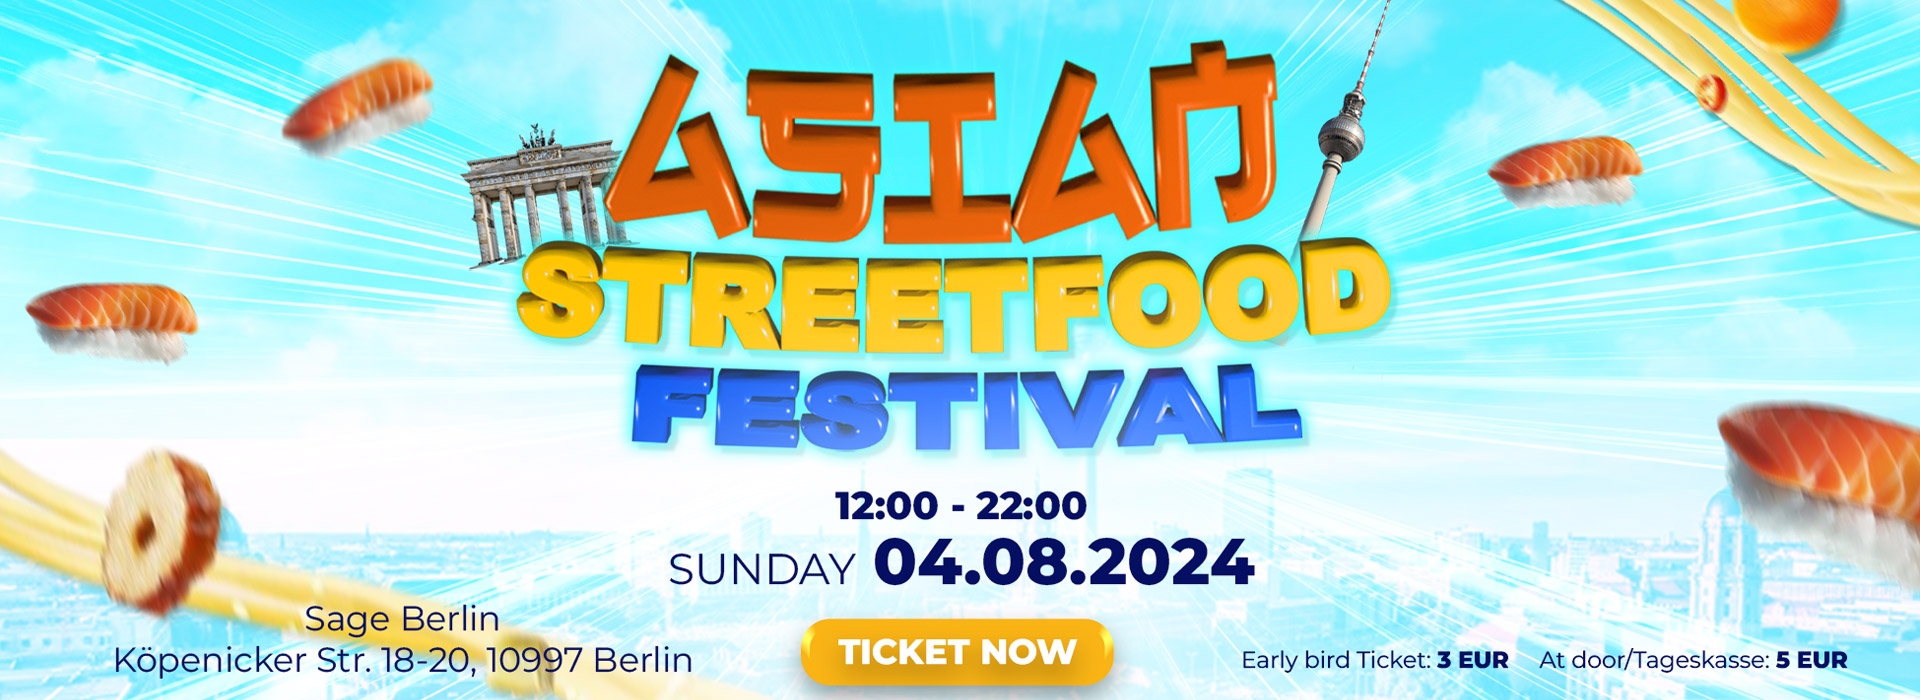 Asian-Streetfood-Festival_01